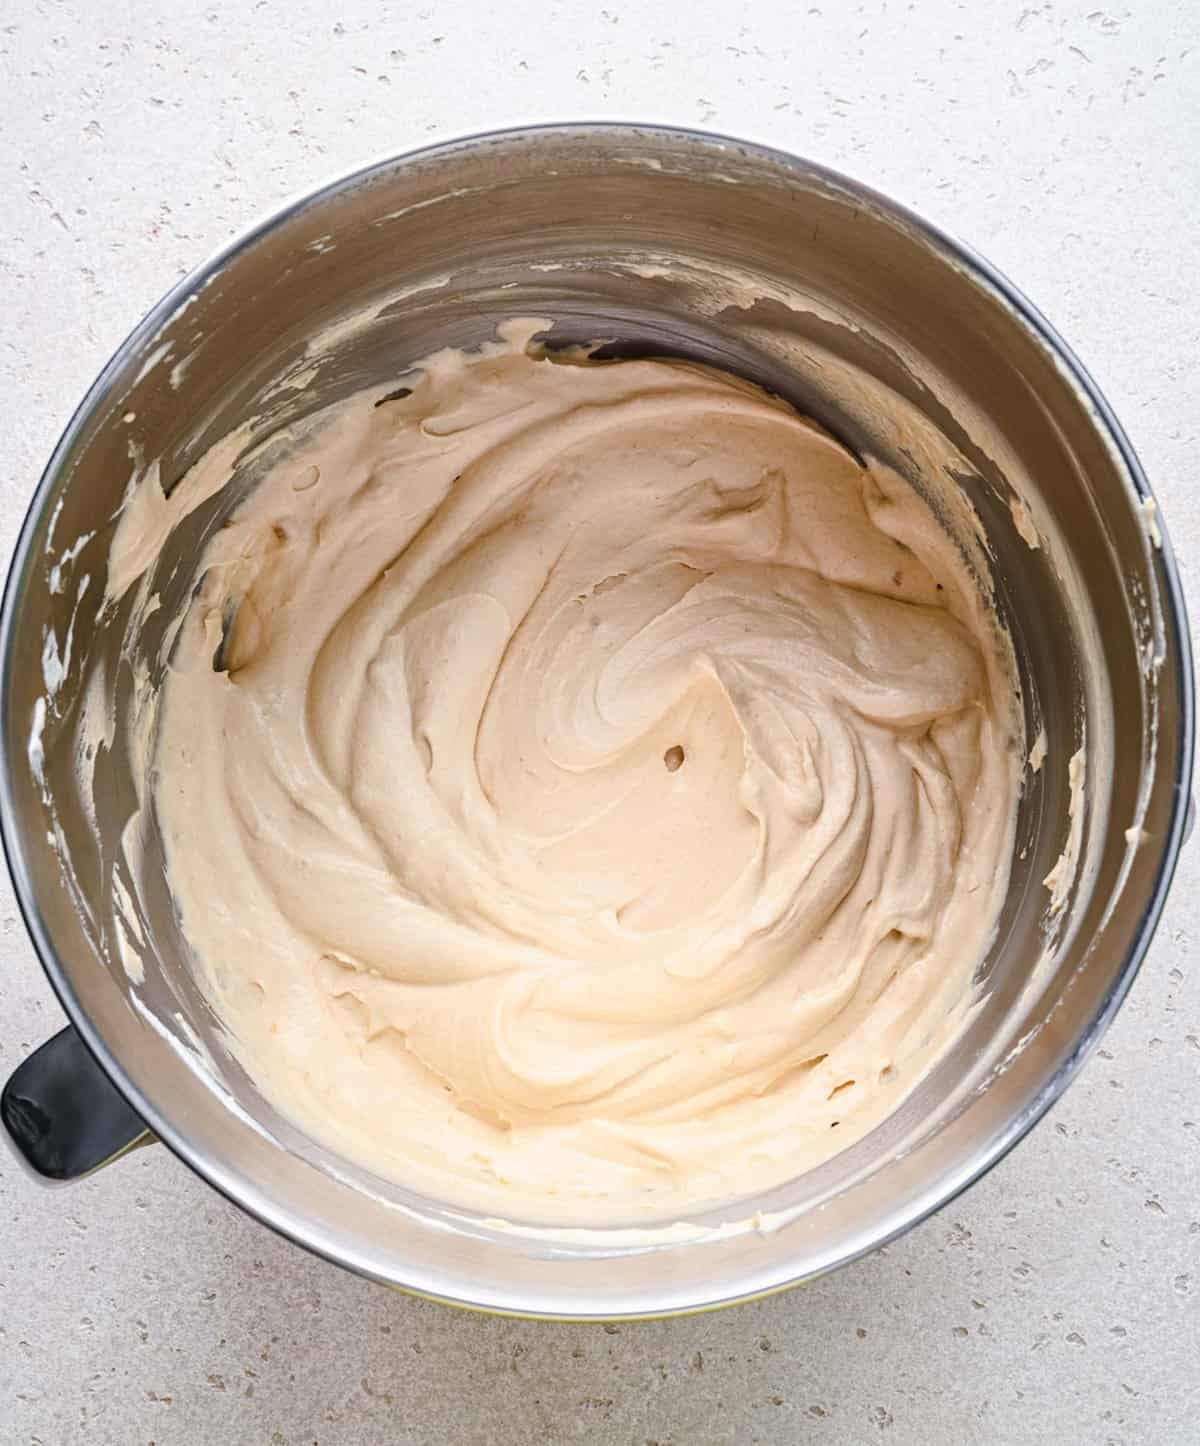 Folding whipped cream into no churn ice cream base.